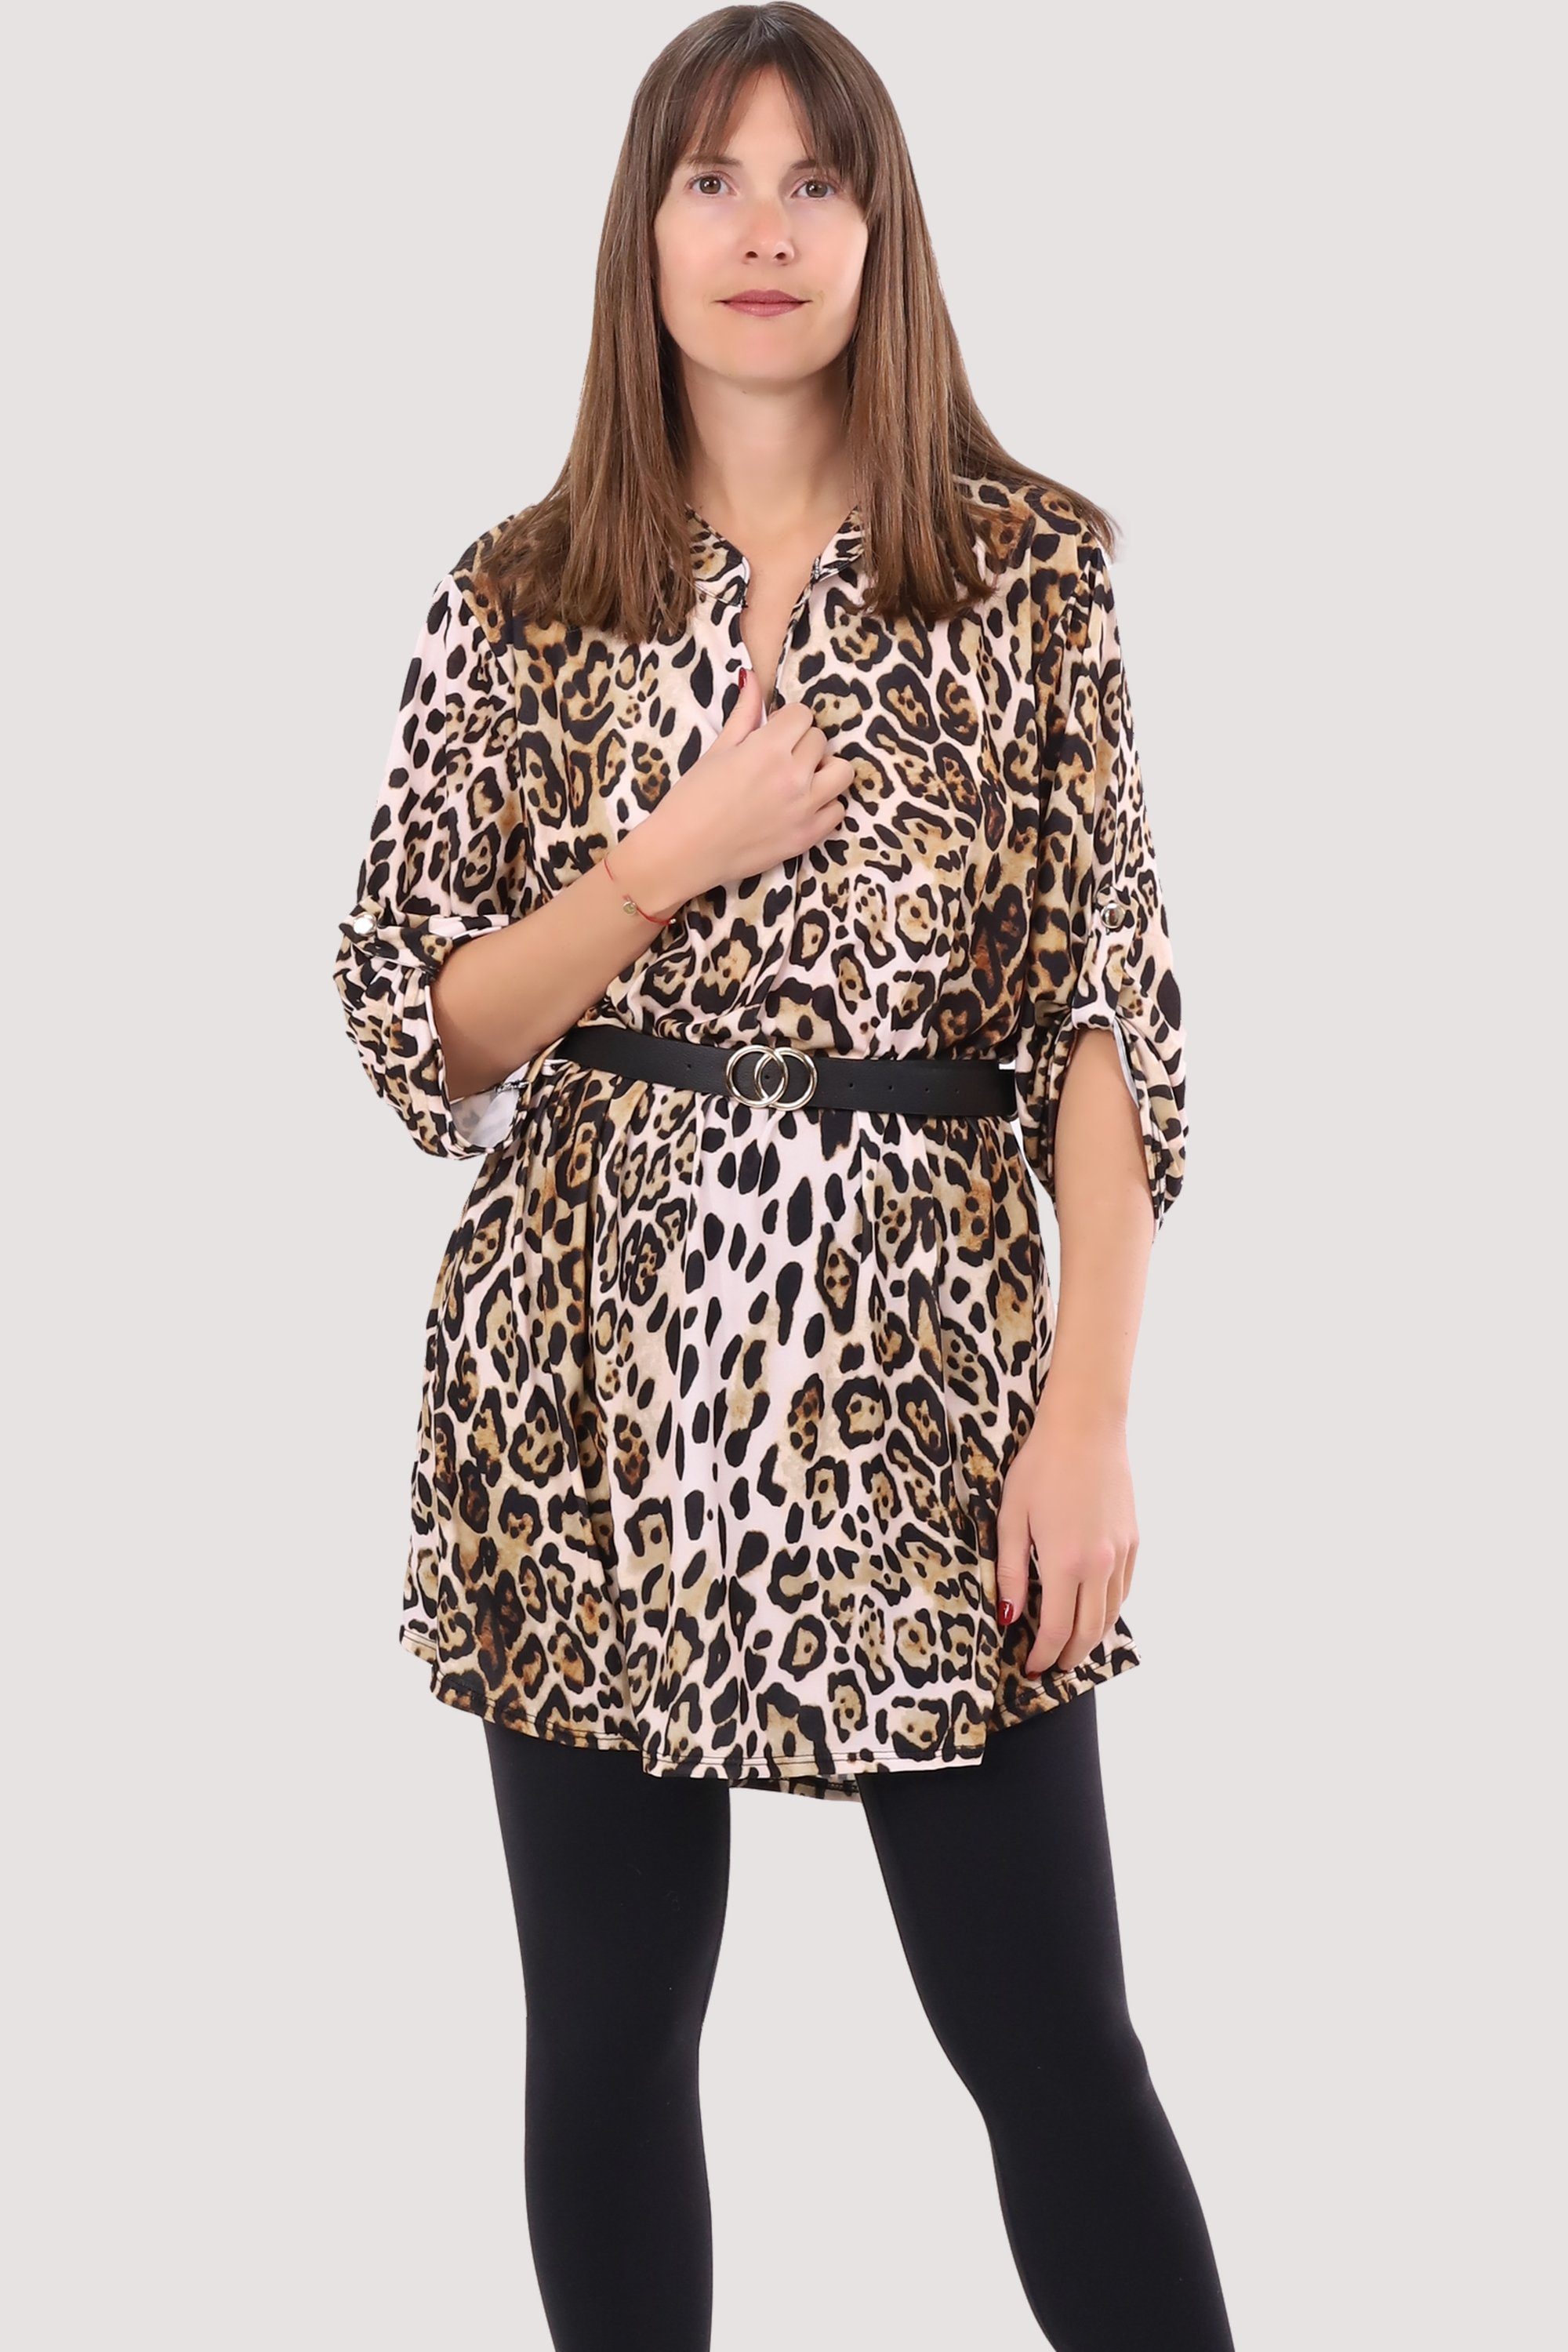 malito more Gürtel Kleid Animalprint Bluse 23203 mit Gepard Druckkleid Einheitsgröße fashion Tunika 1 than